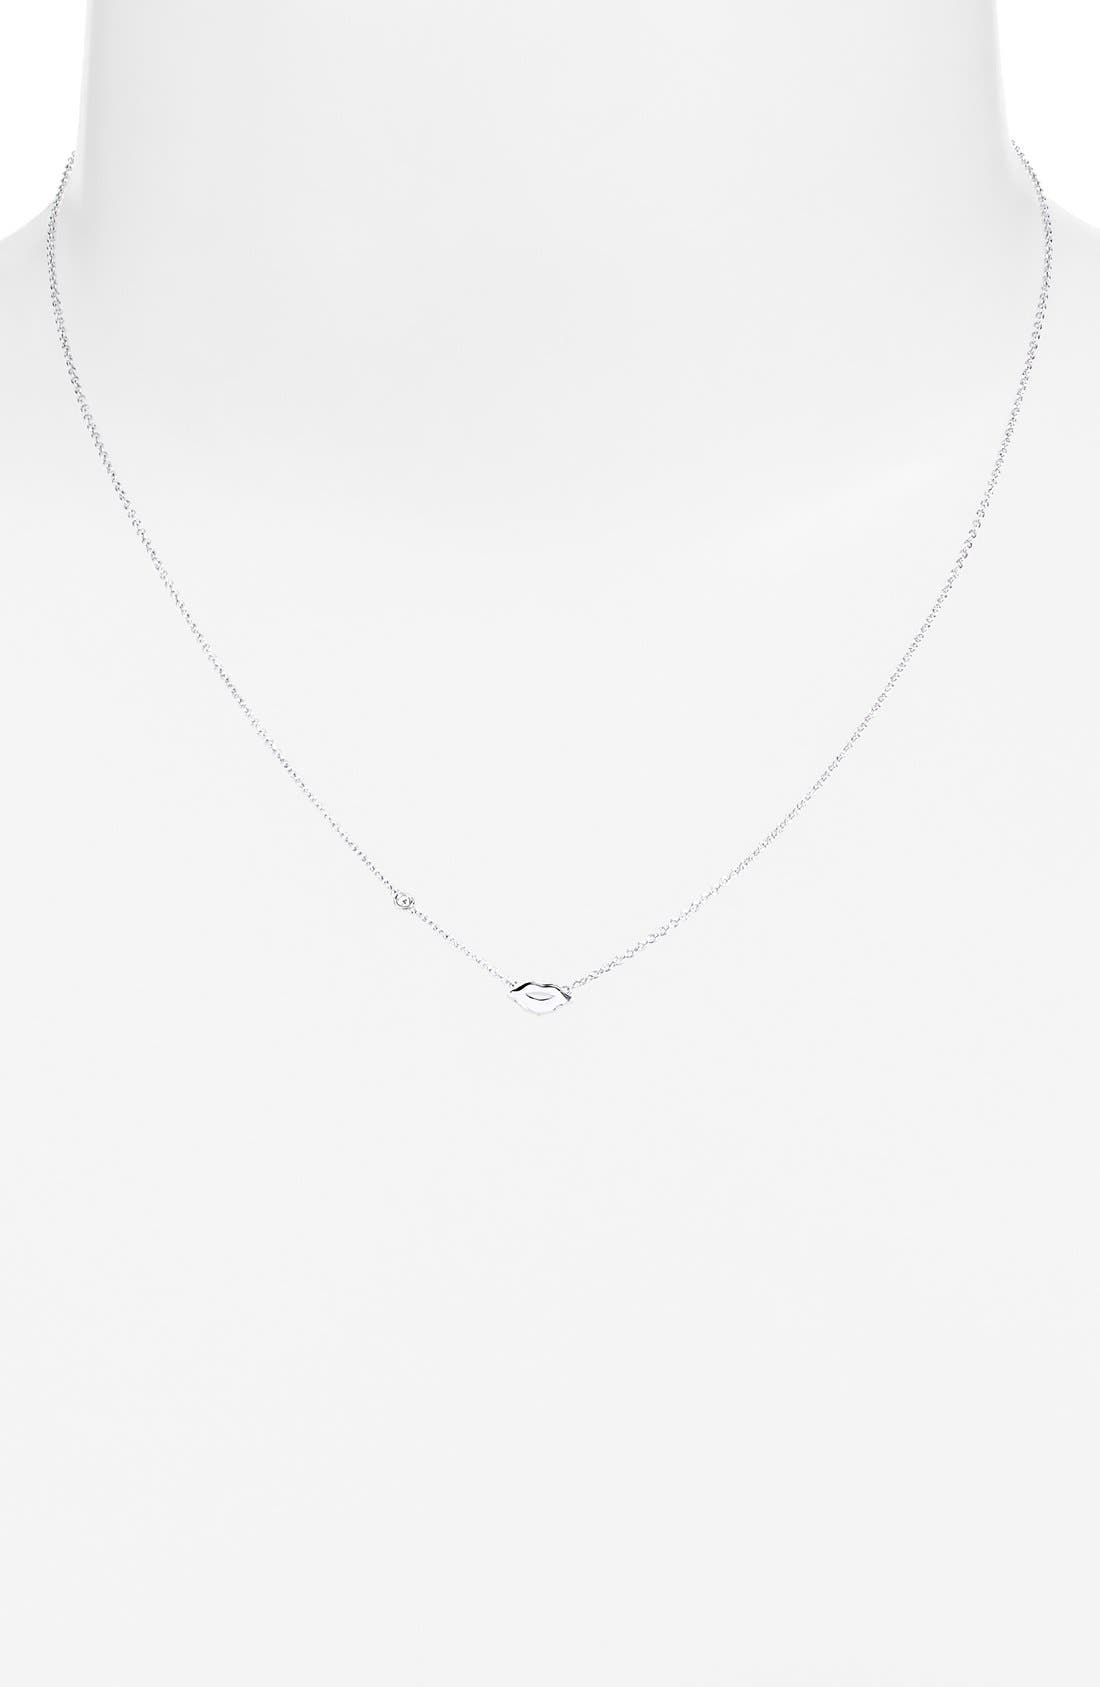 SHY BY SE | Diamond Lips Necklace - 0.015 ctw | Nordstrom Rack